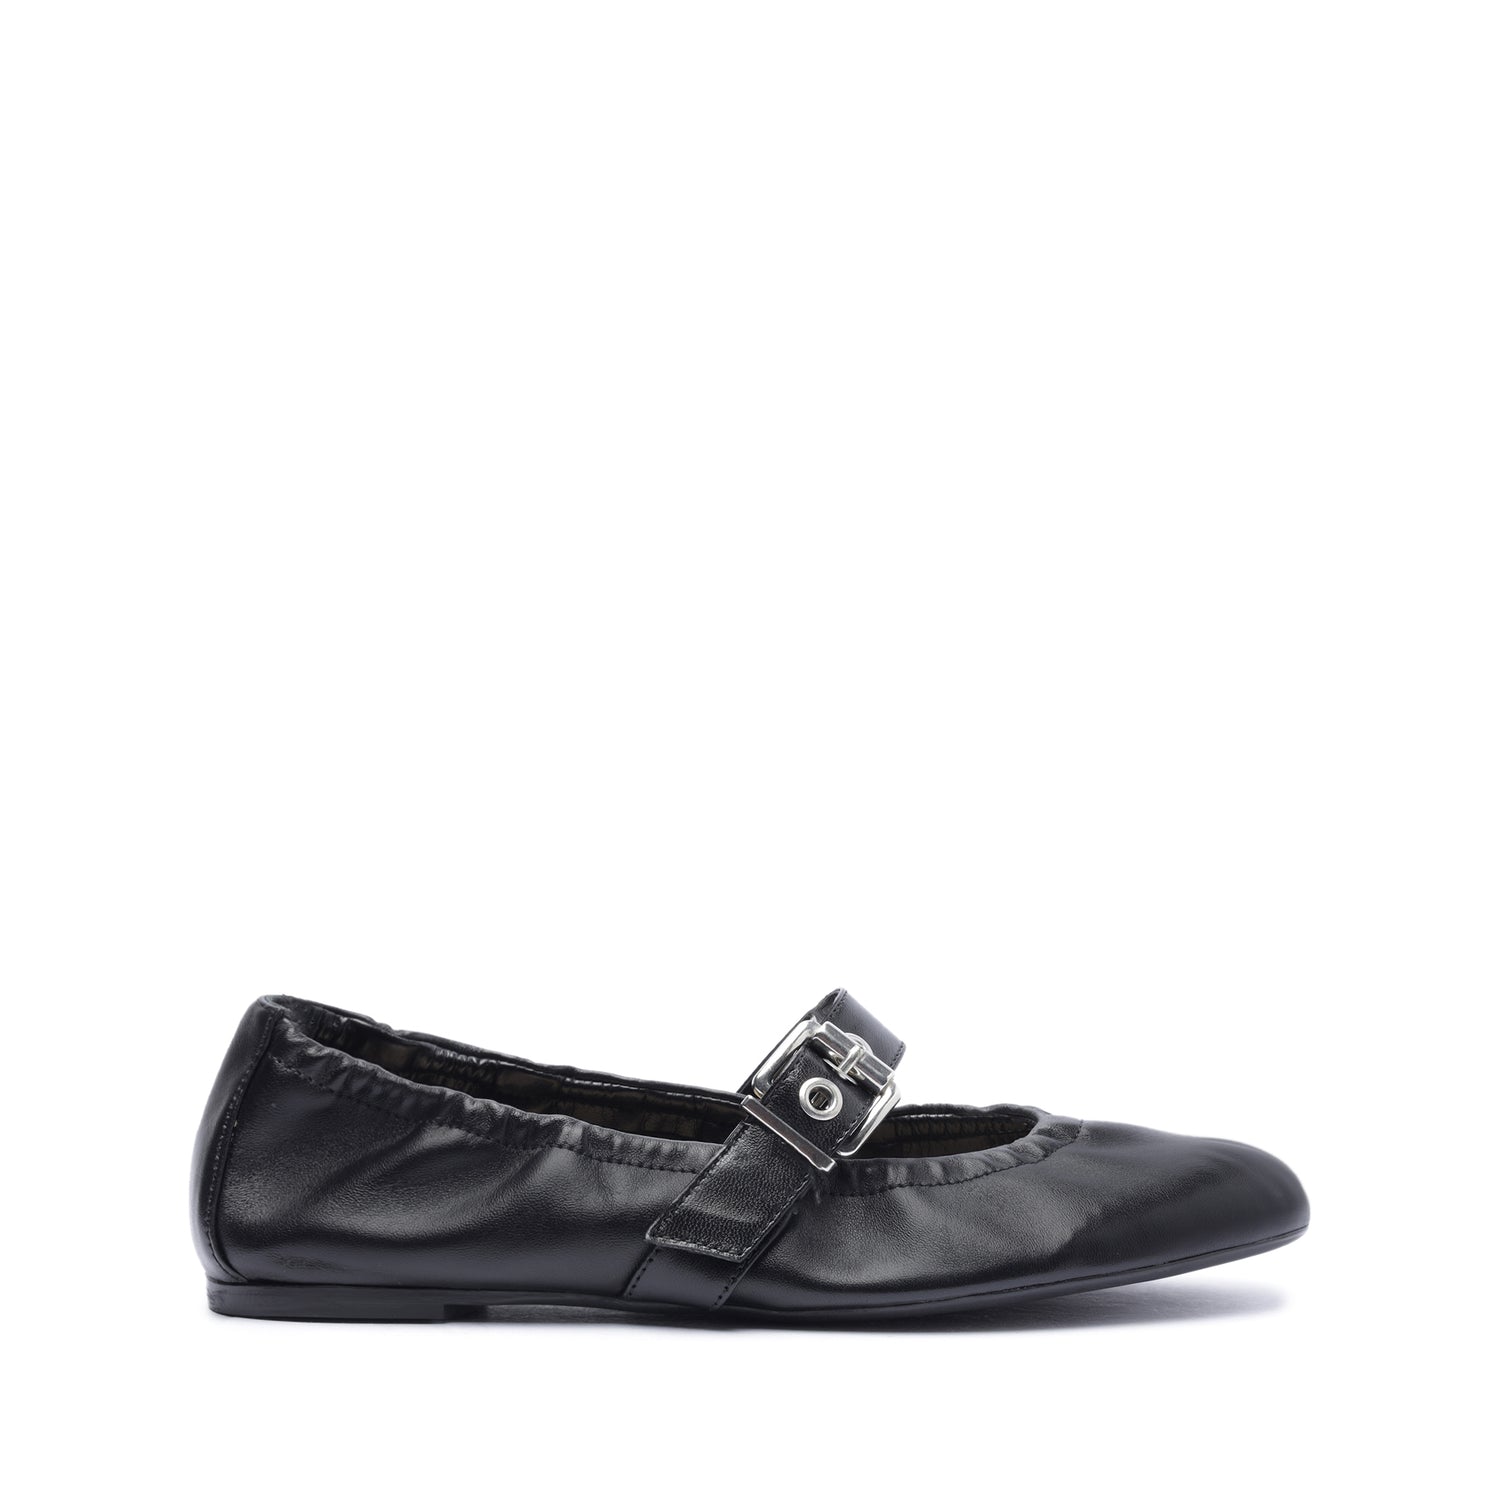 Calita Nappa Leather Flat Flats RESORT 24 5 Black Nappa Leather - Schutz Shoes